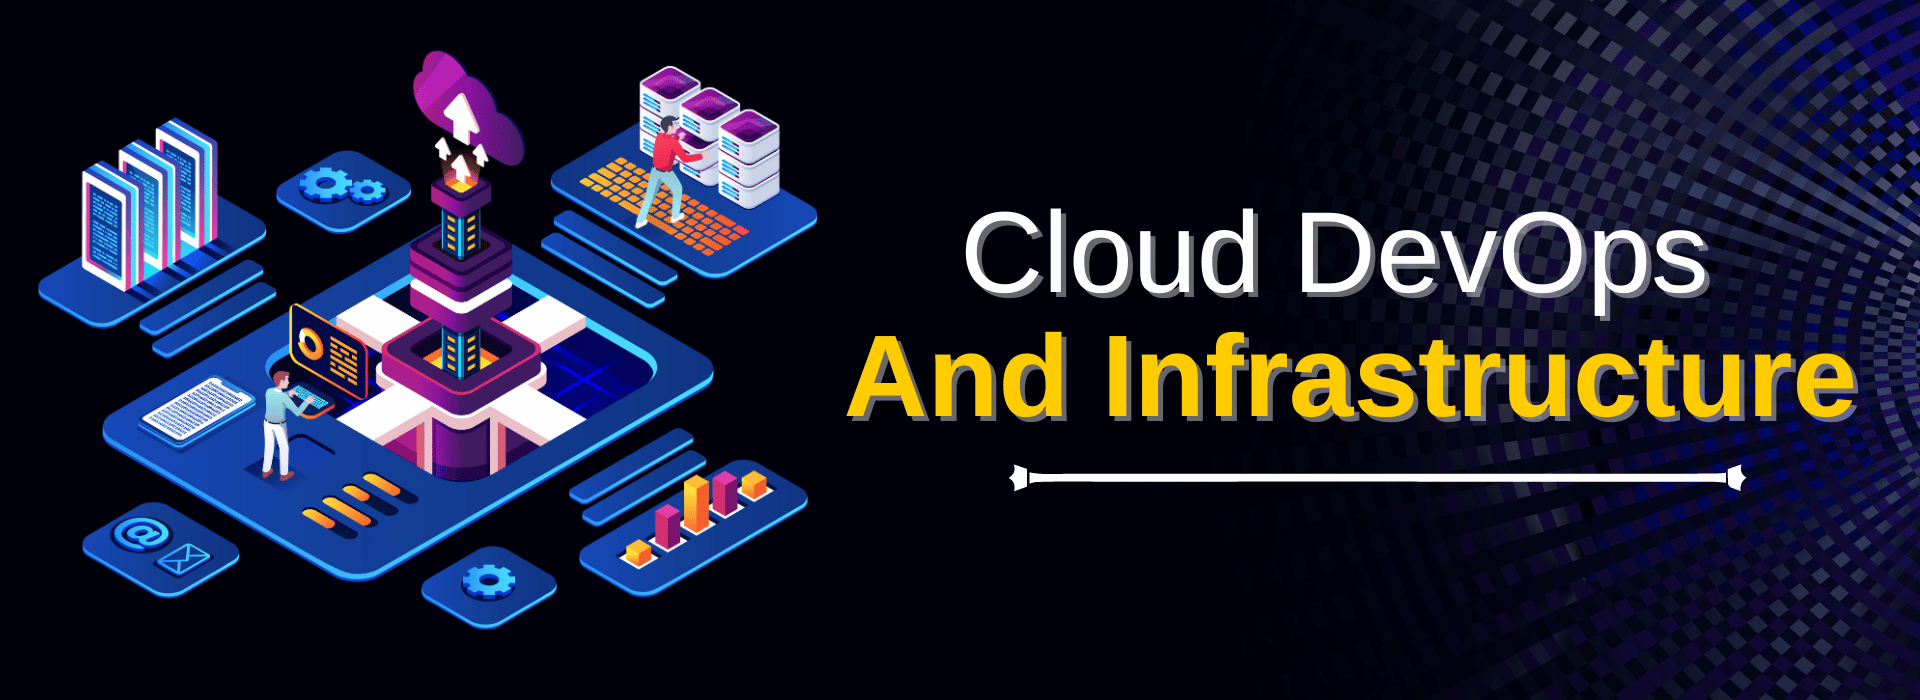 Cloud DevOps and Infrastructure